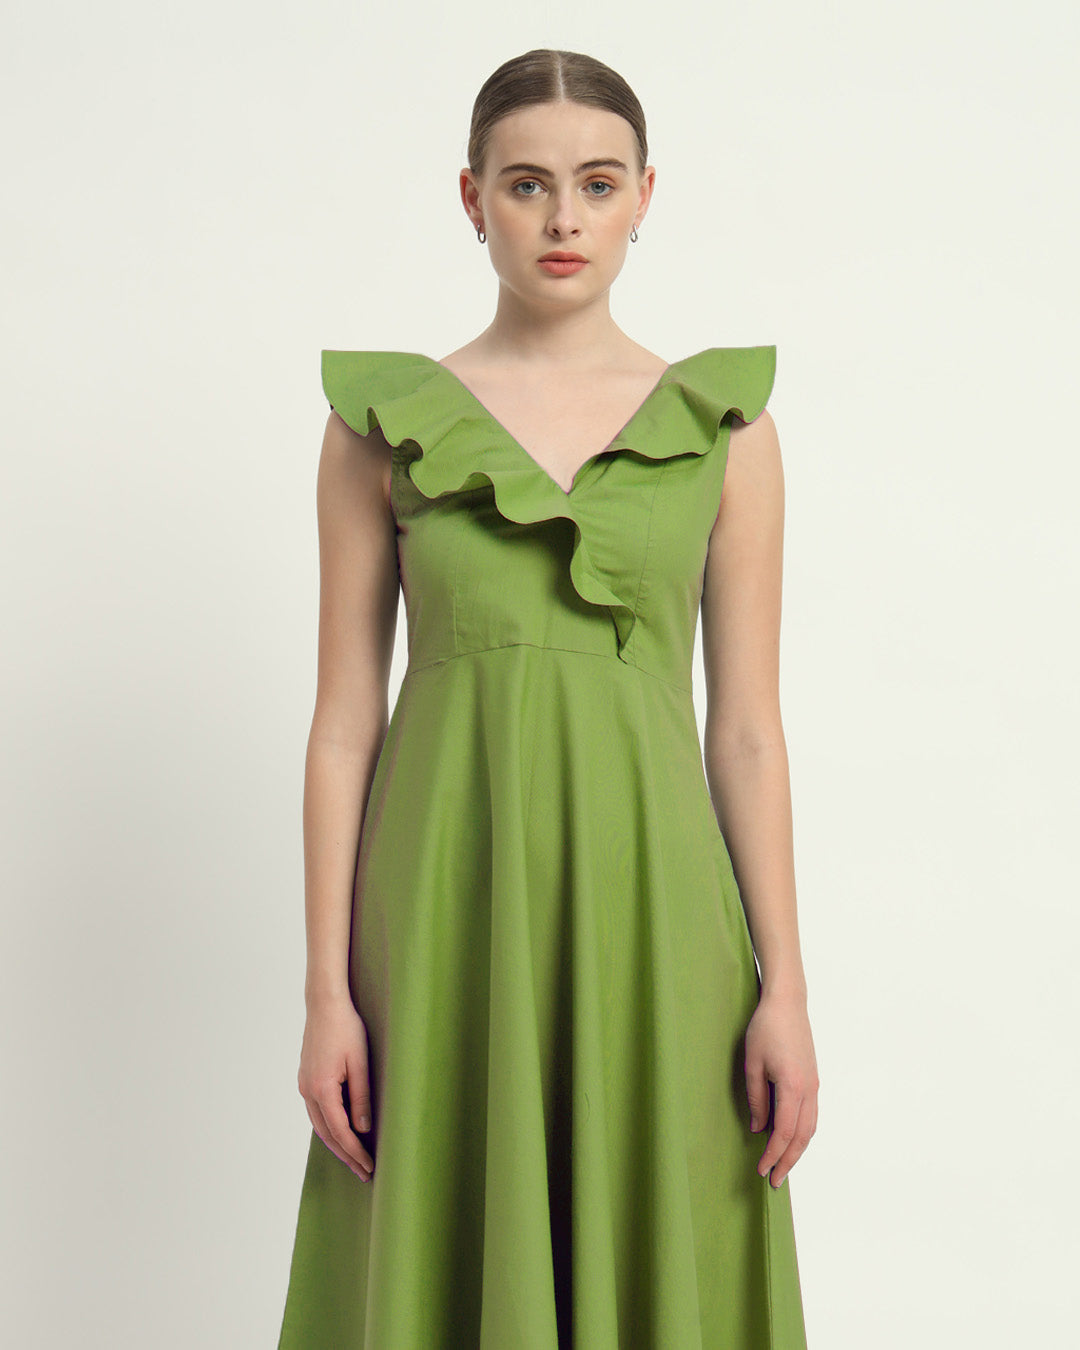 The Fern Albany Cotton Dress